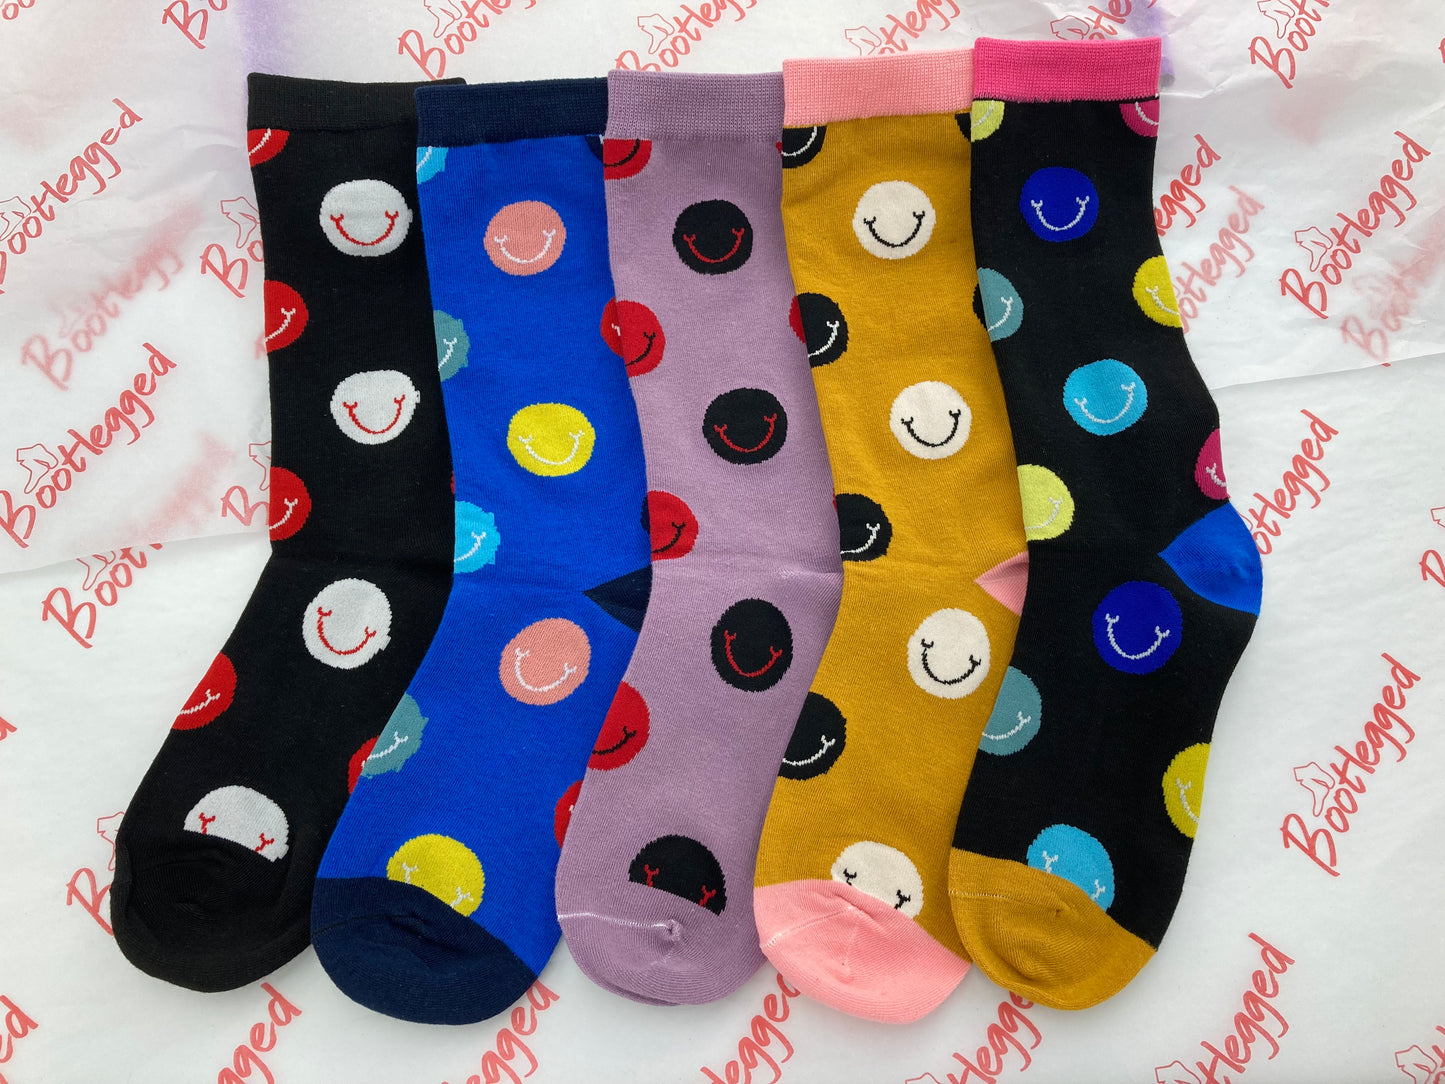 Ladies Smiley Faces 5 Pairs Pack of Cotton Crew Socks Sizes UK 3-8 EU 35-42